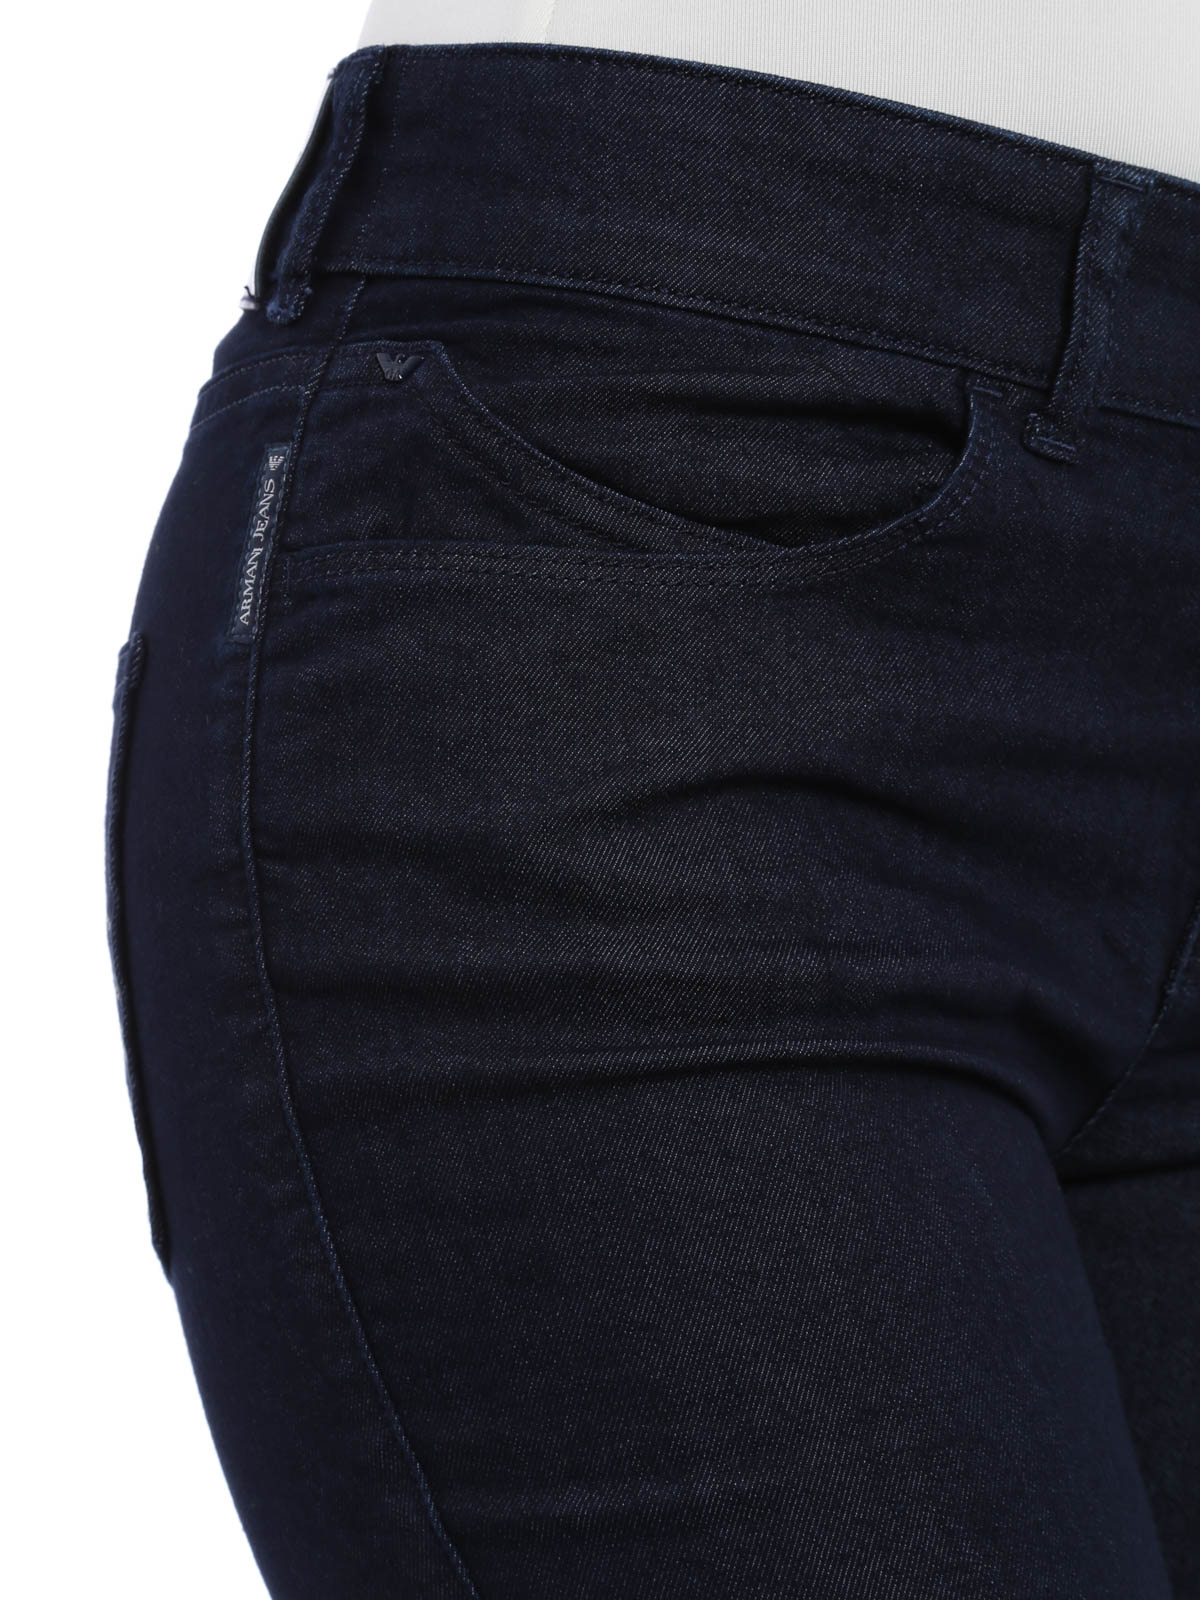 armani jeans buy online